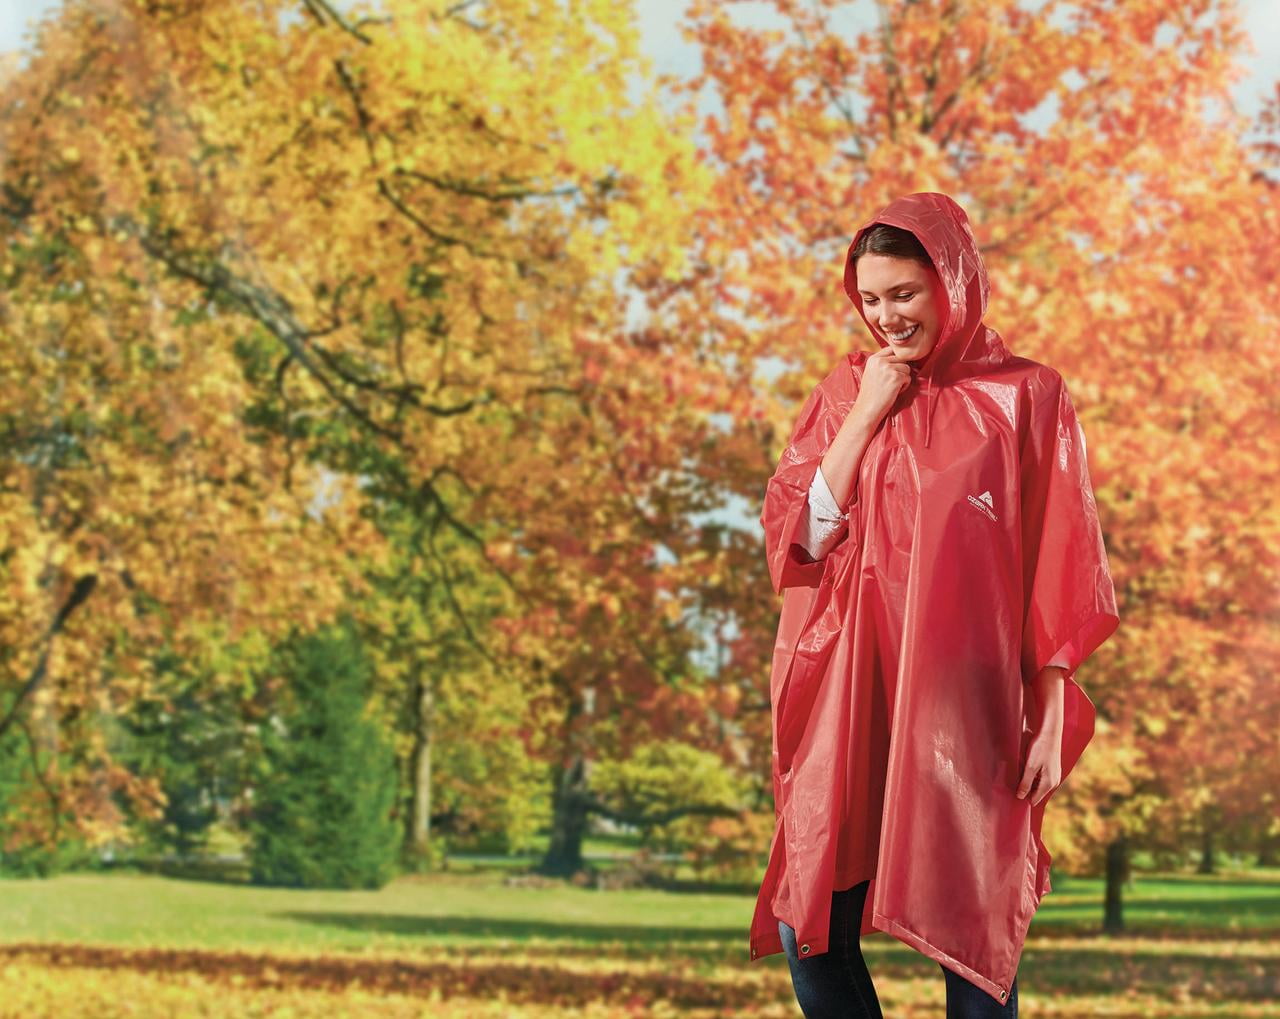 Men & Women Rainwear Waterproof Rain Jacket Coat Attached Hood Raincoat Poncho 